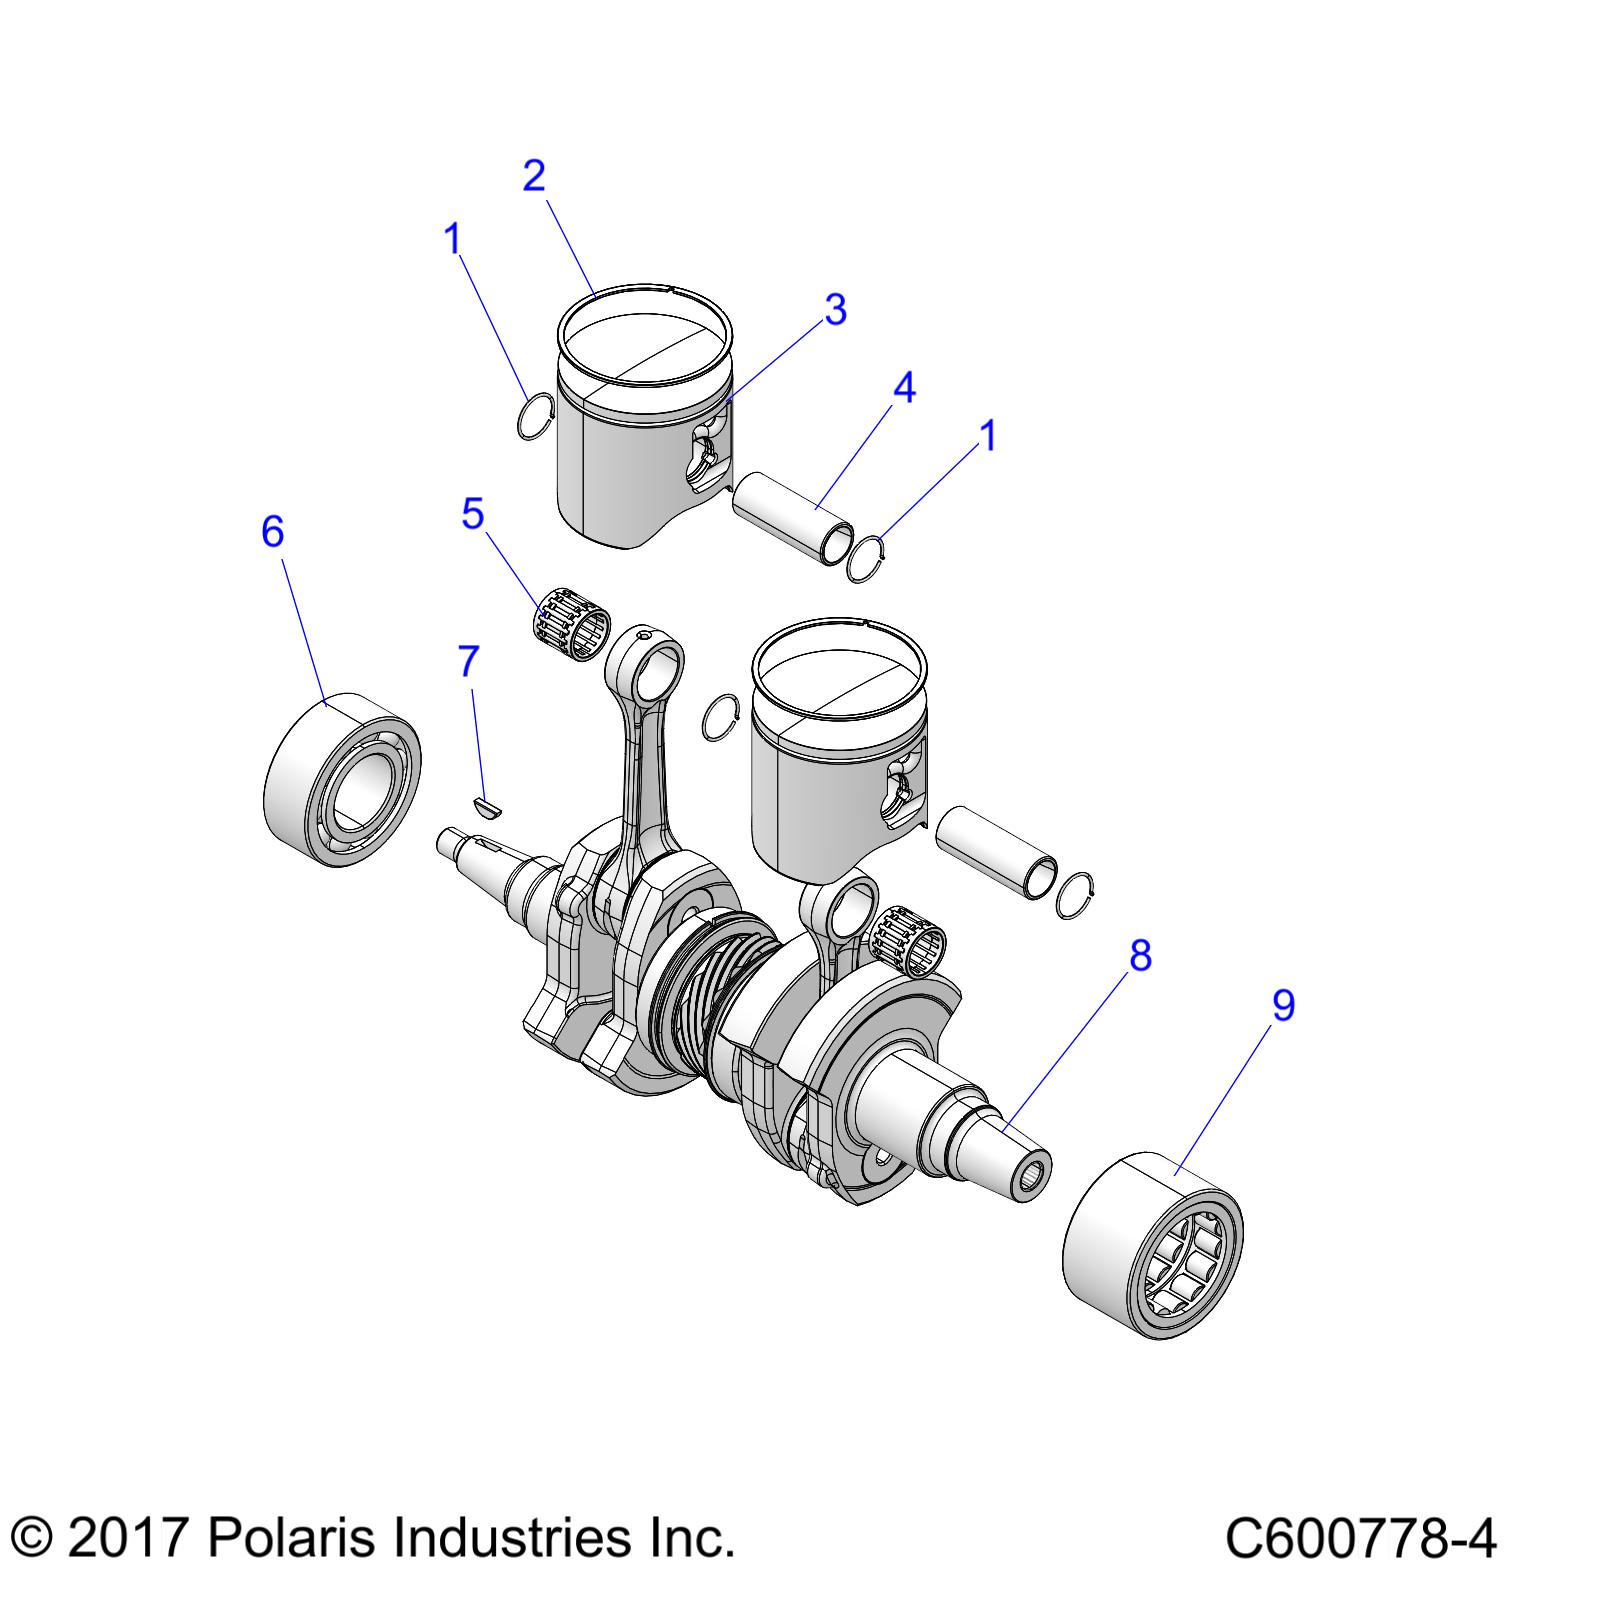 ENGINE, PISTON and CRANKSHAFT - S19EEC8RS/REM ALL OPTIONS (C600778-4)